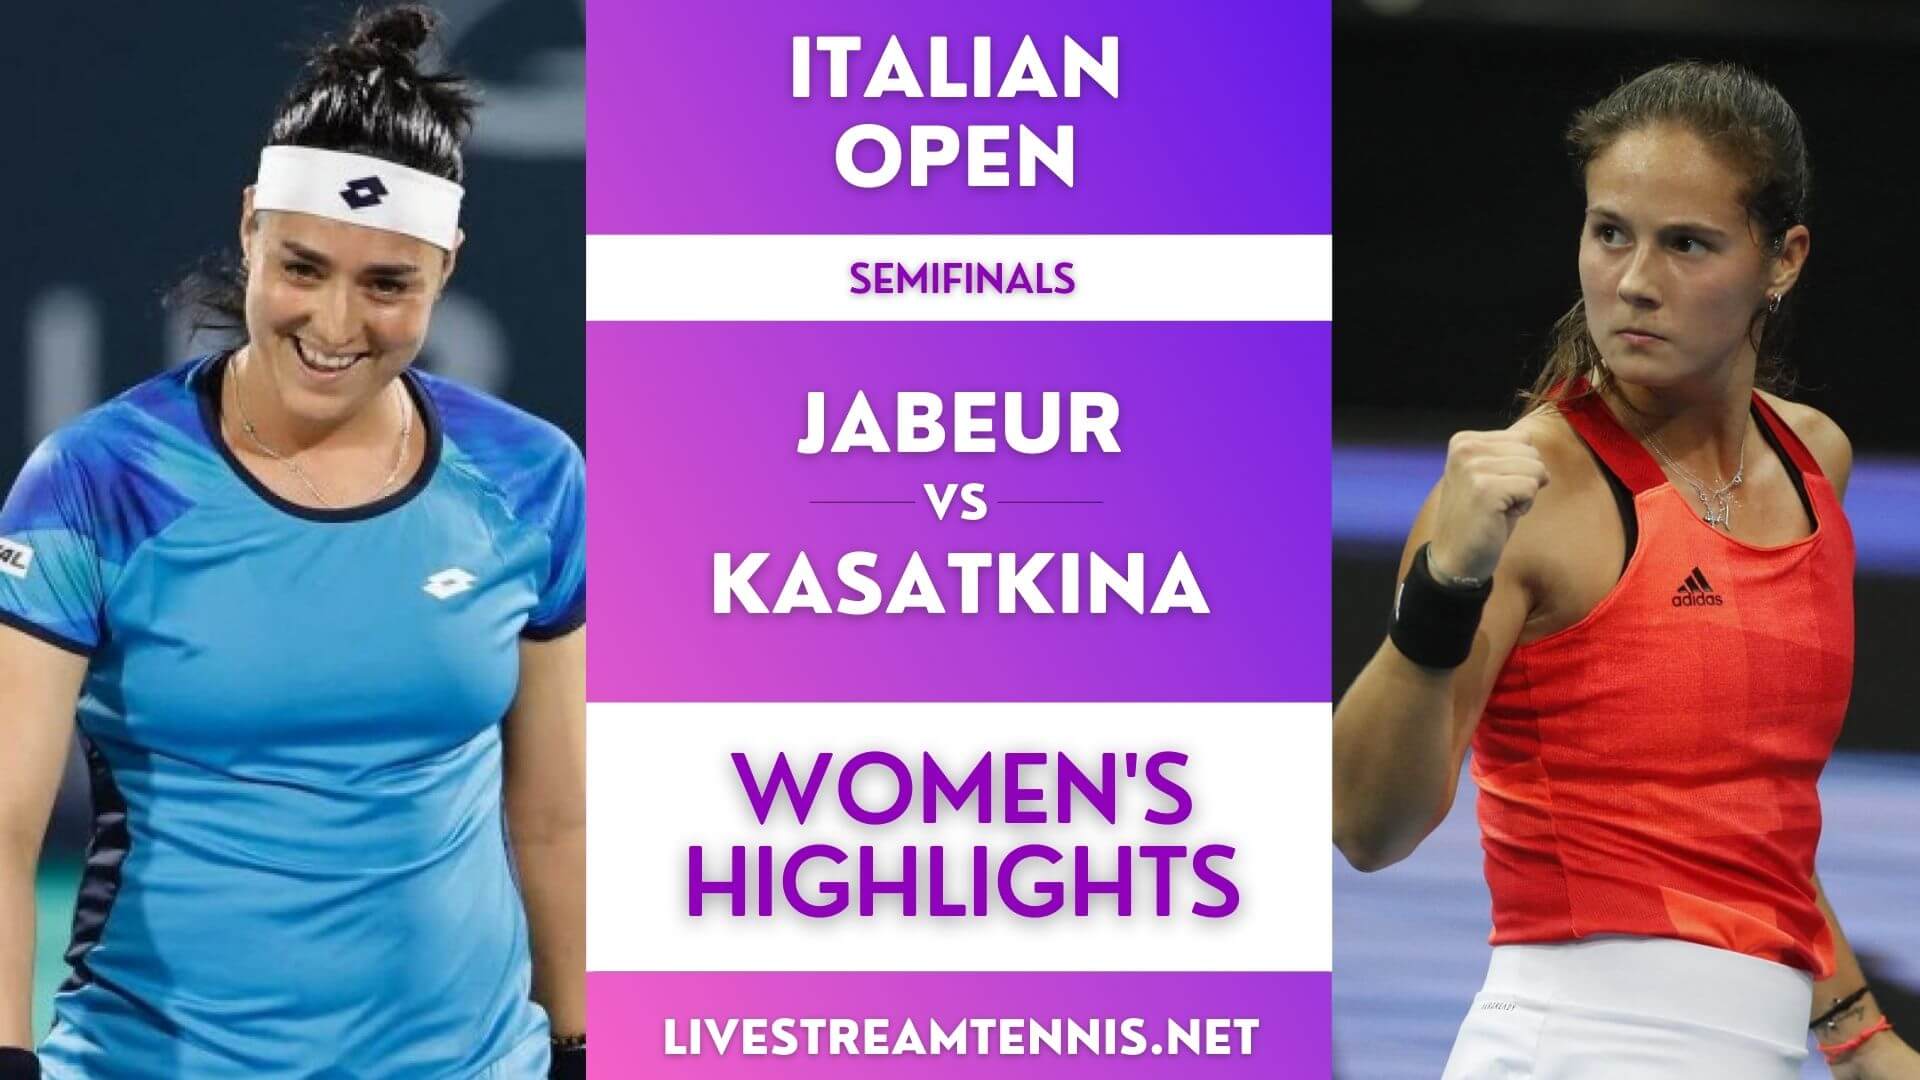 Italian Open Ladies Semifinal 1 Highlights 2022